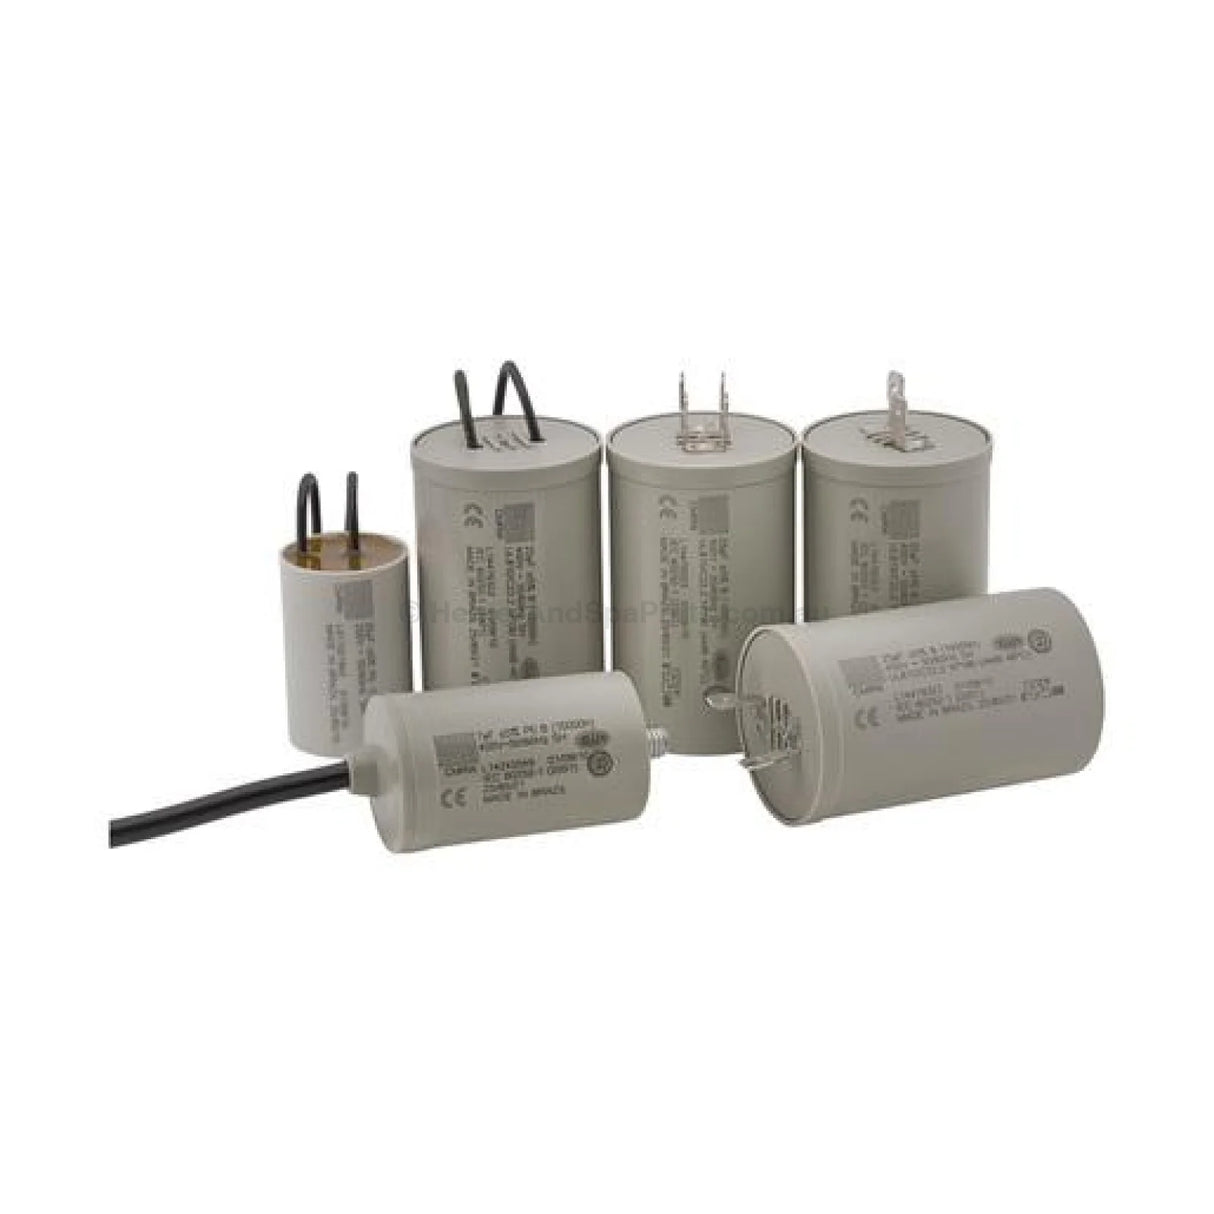 Pump Start / Run Capacitors - various sizes - Heater and Spa Parts